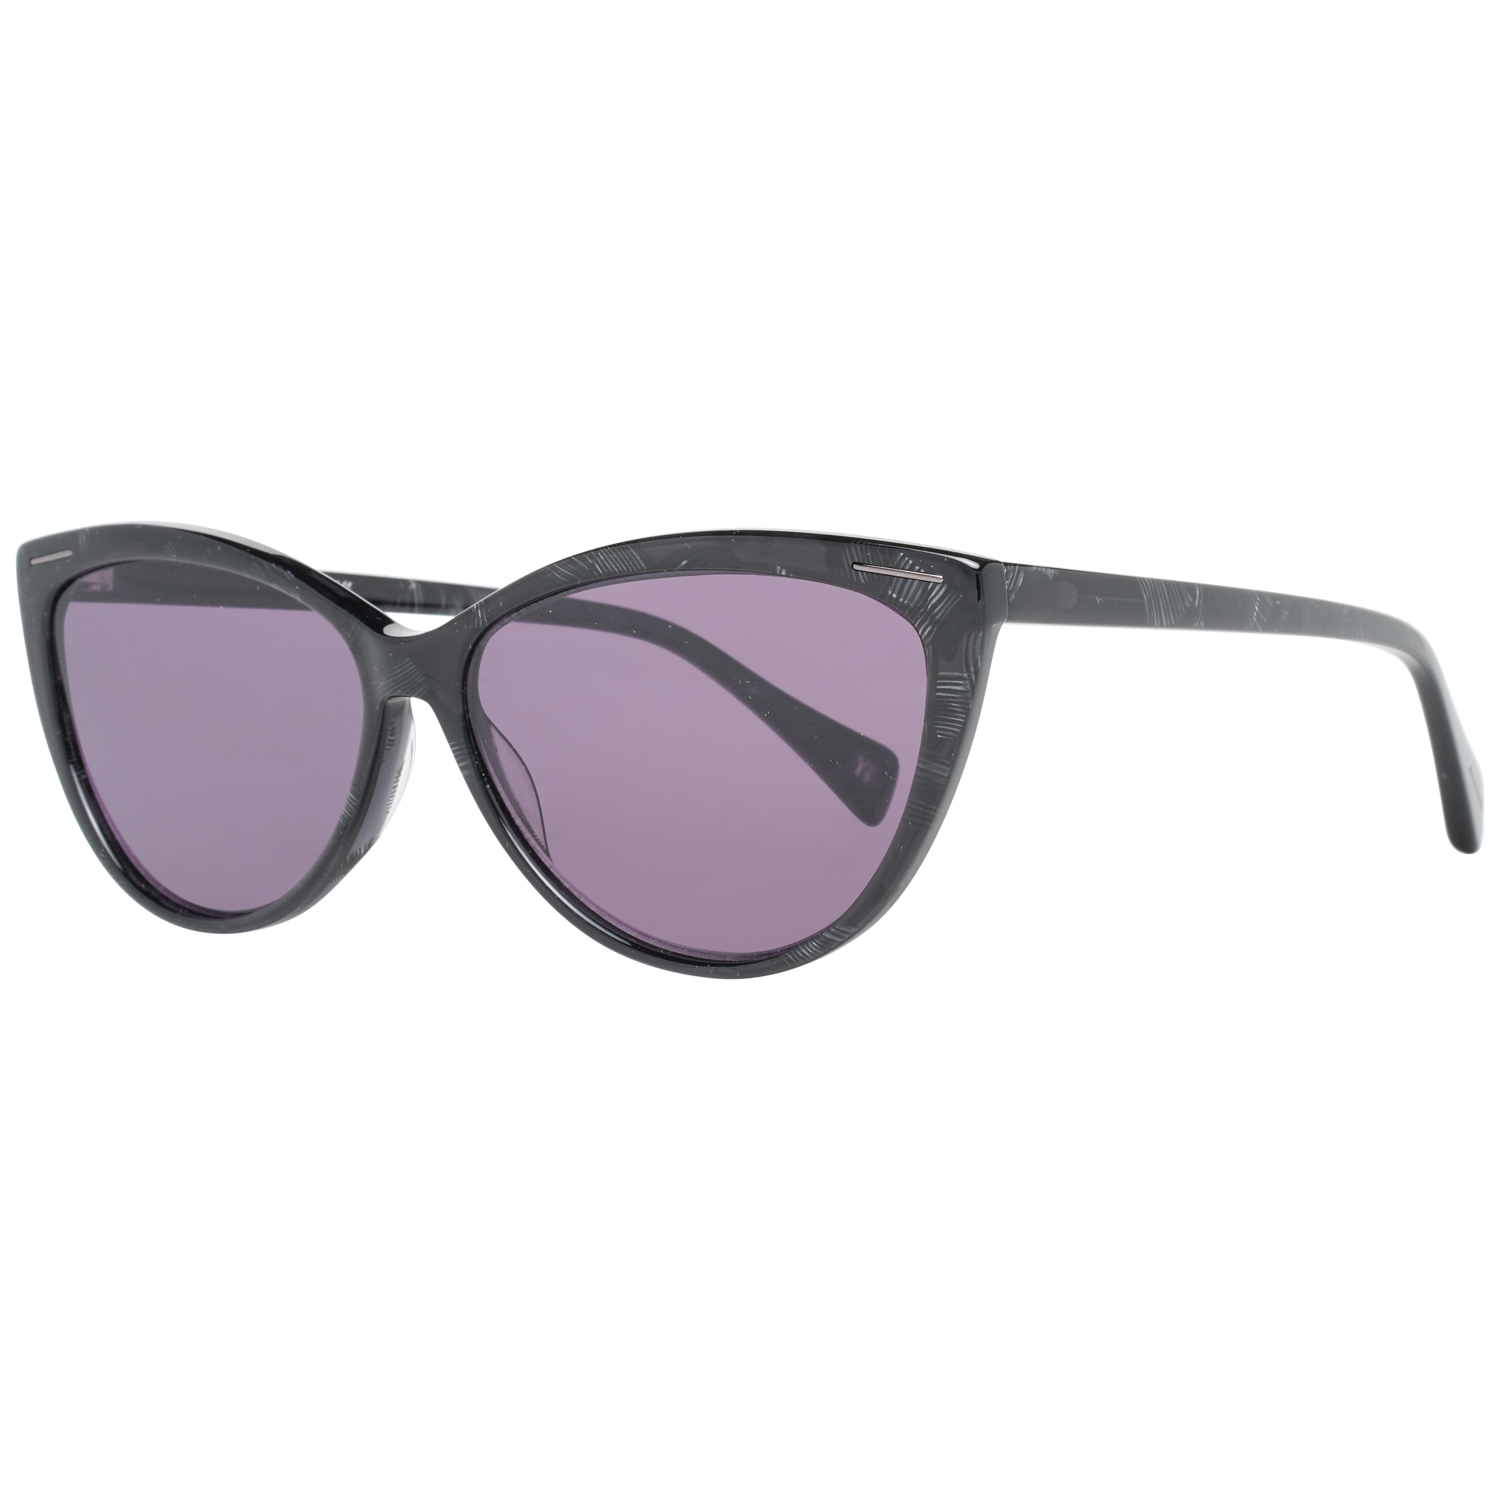 Yohji Yamamoto Sunglasses YS5001 024 58 Black